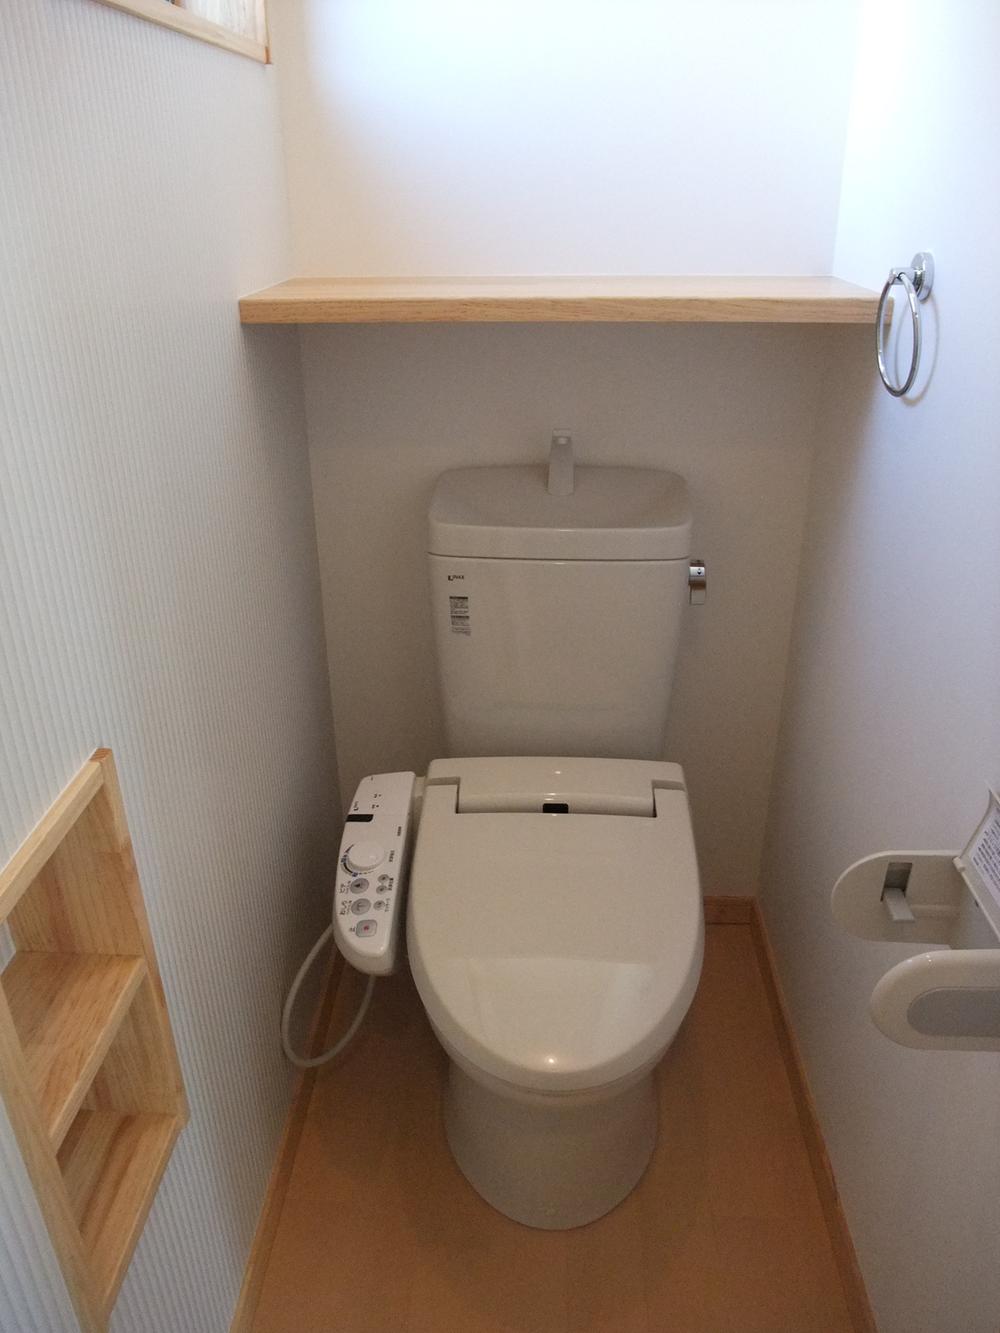 Toilet. WC heater toilet seat with storage